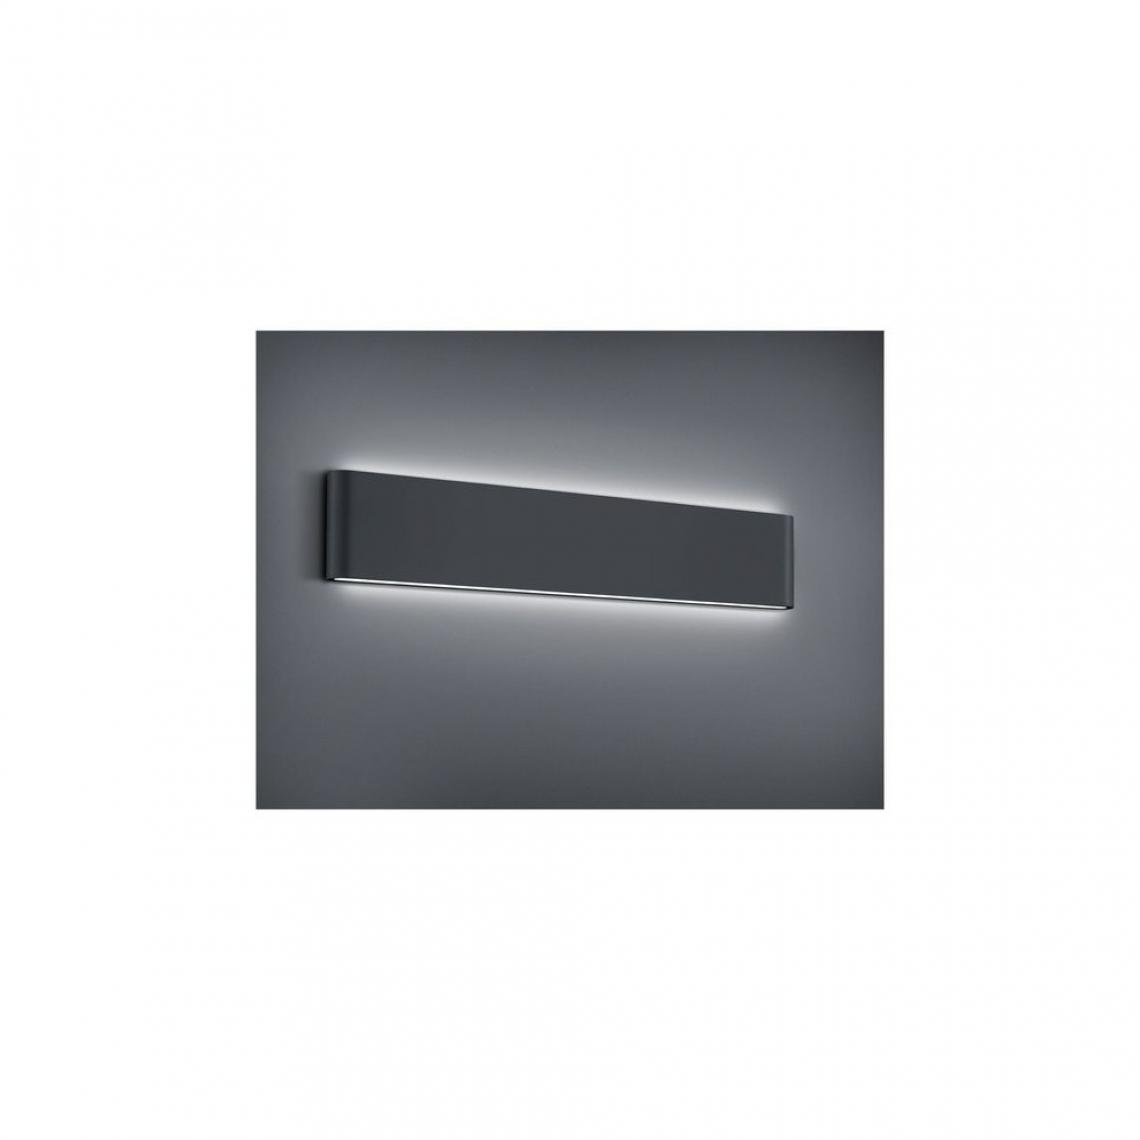 Boutica-Design - Applique Thames II Anthracite 2x8W SMD LED - Applique, hublot